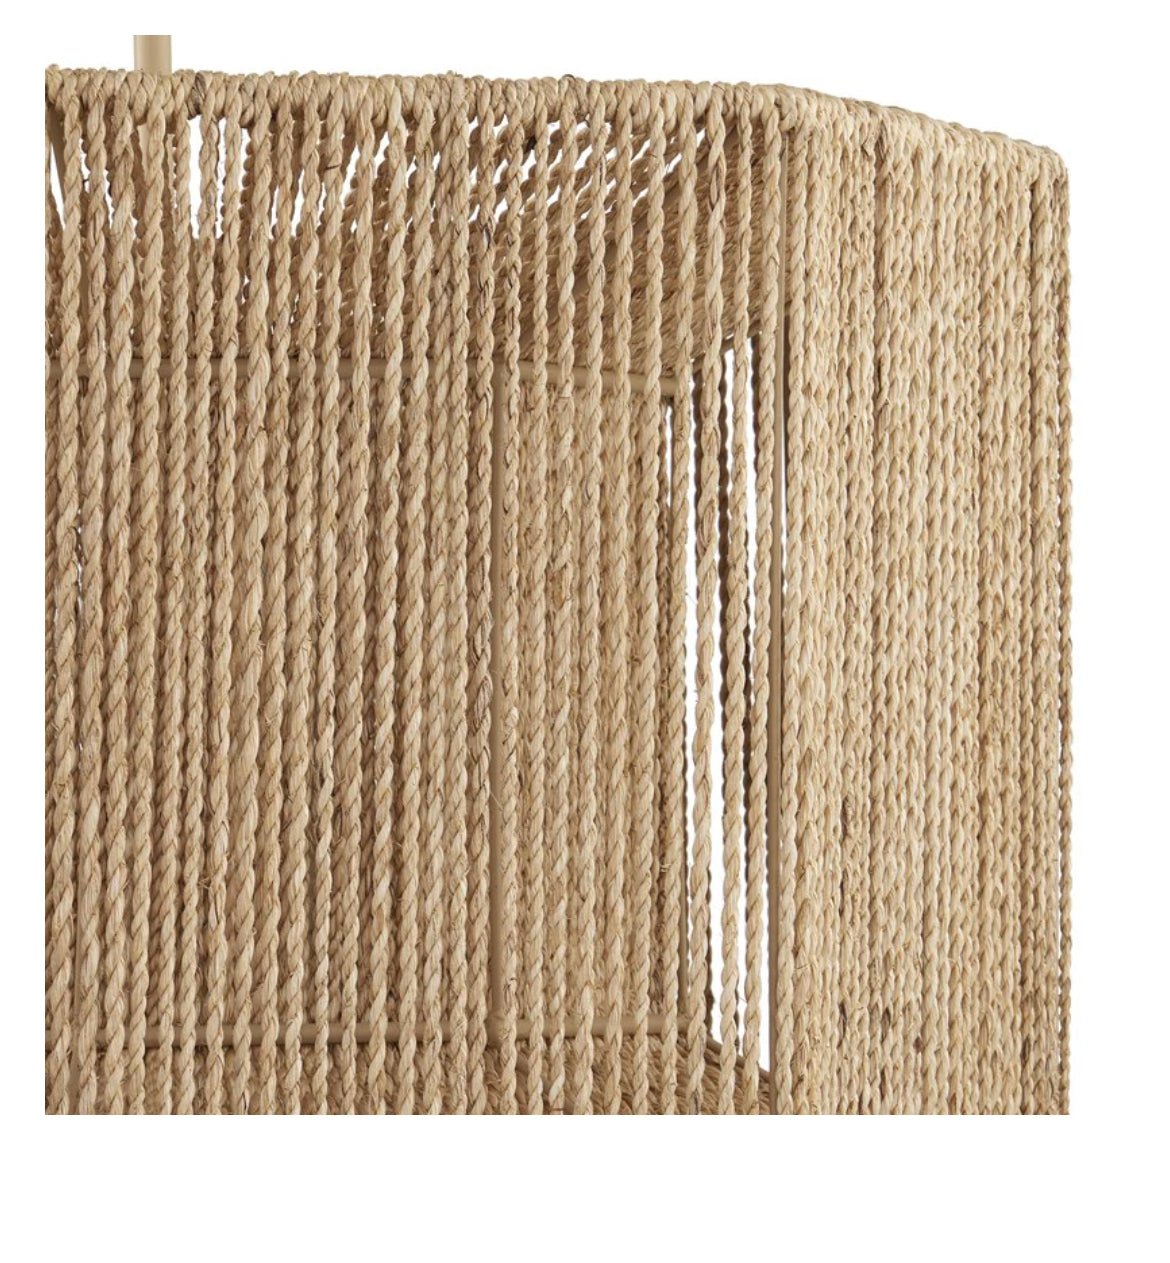 ‘Mereworth’ Medium Rope Chandelier - EcoLuxe Furnishings